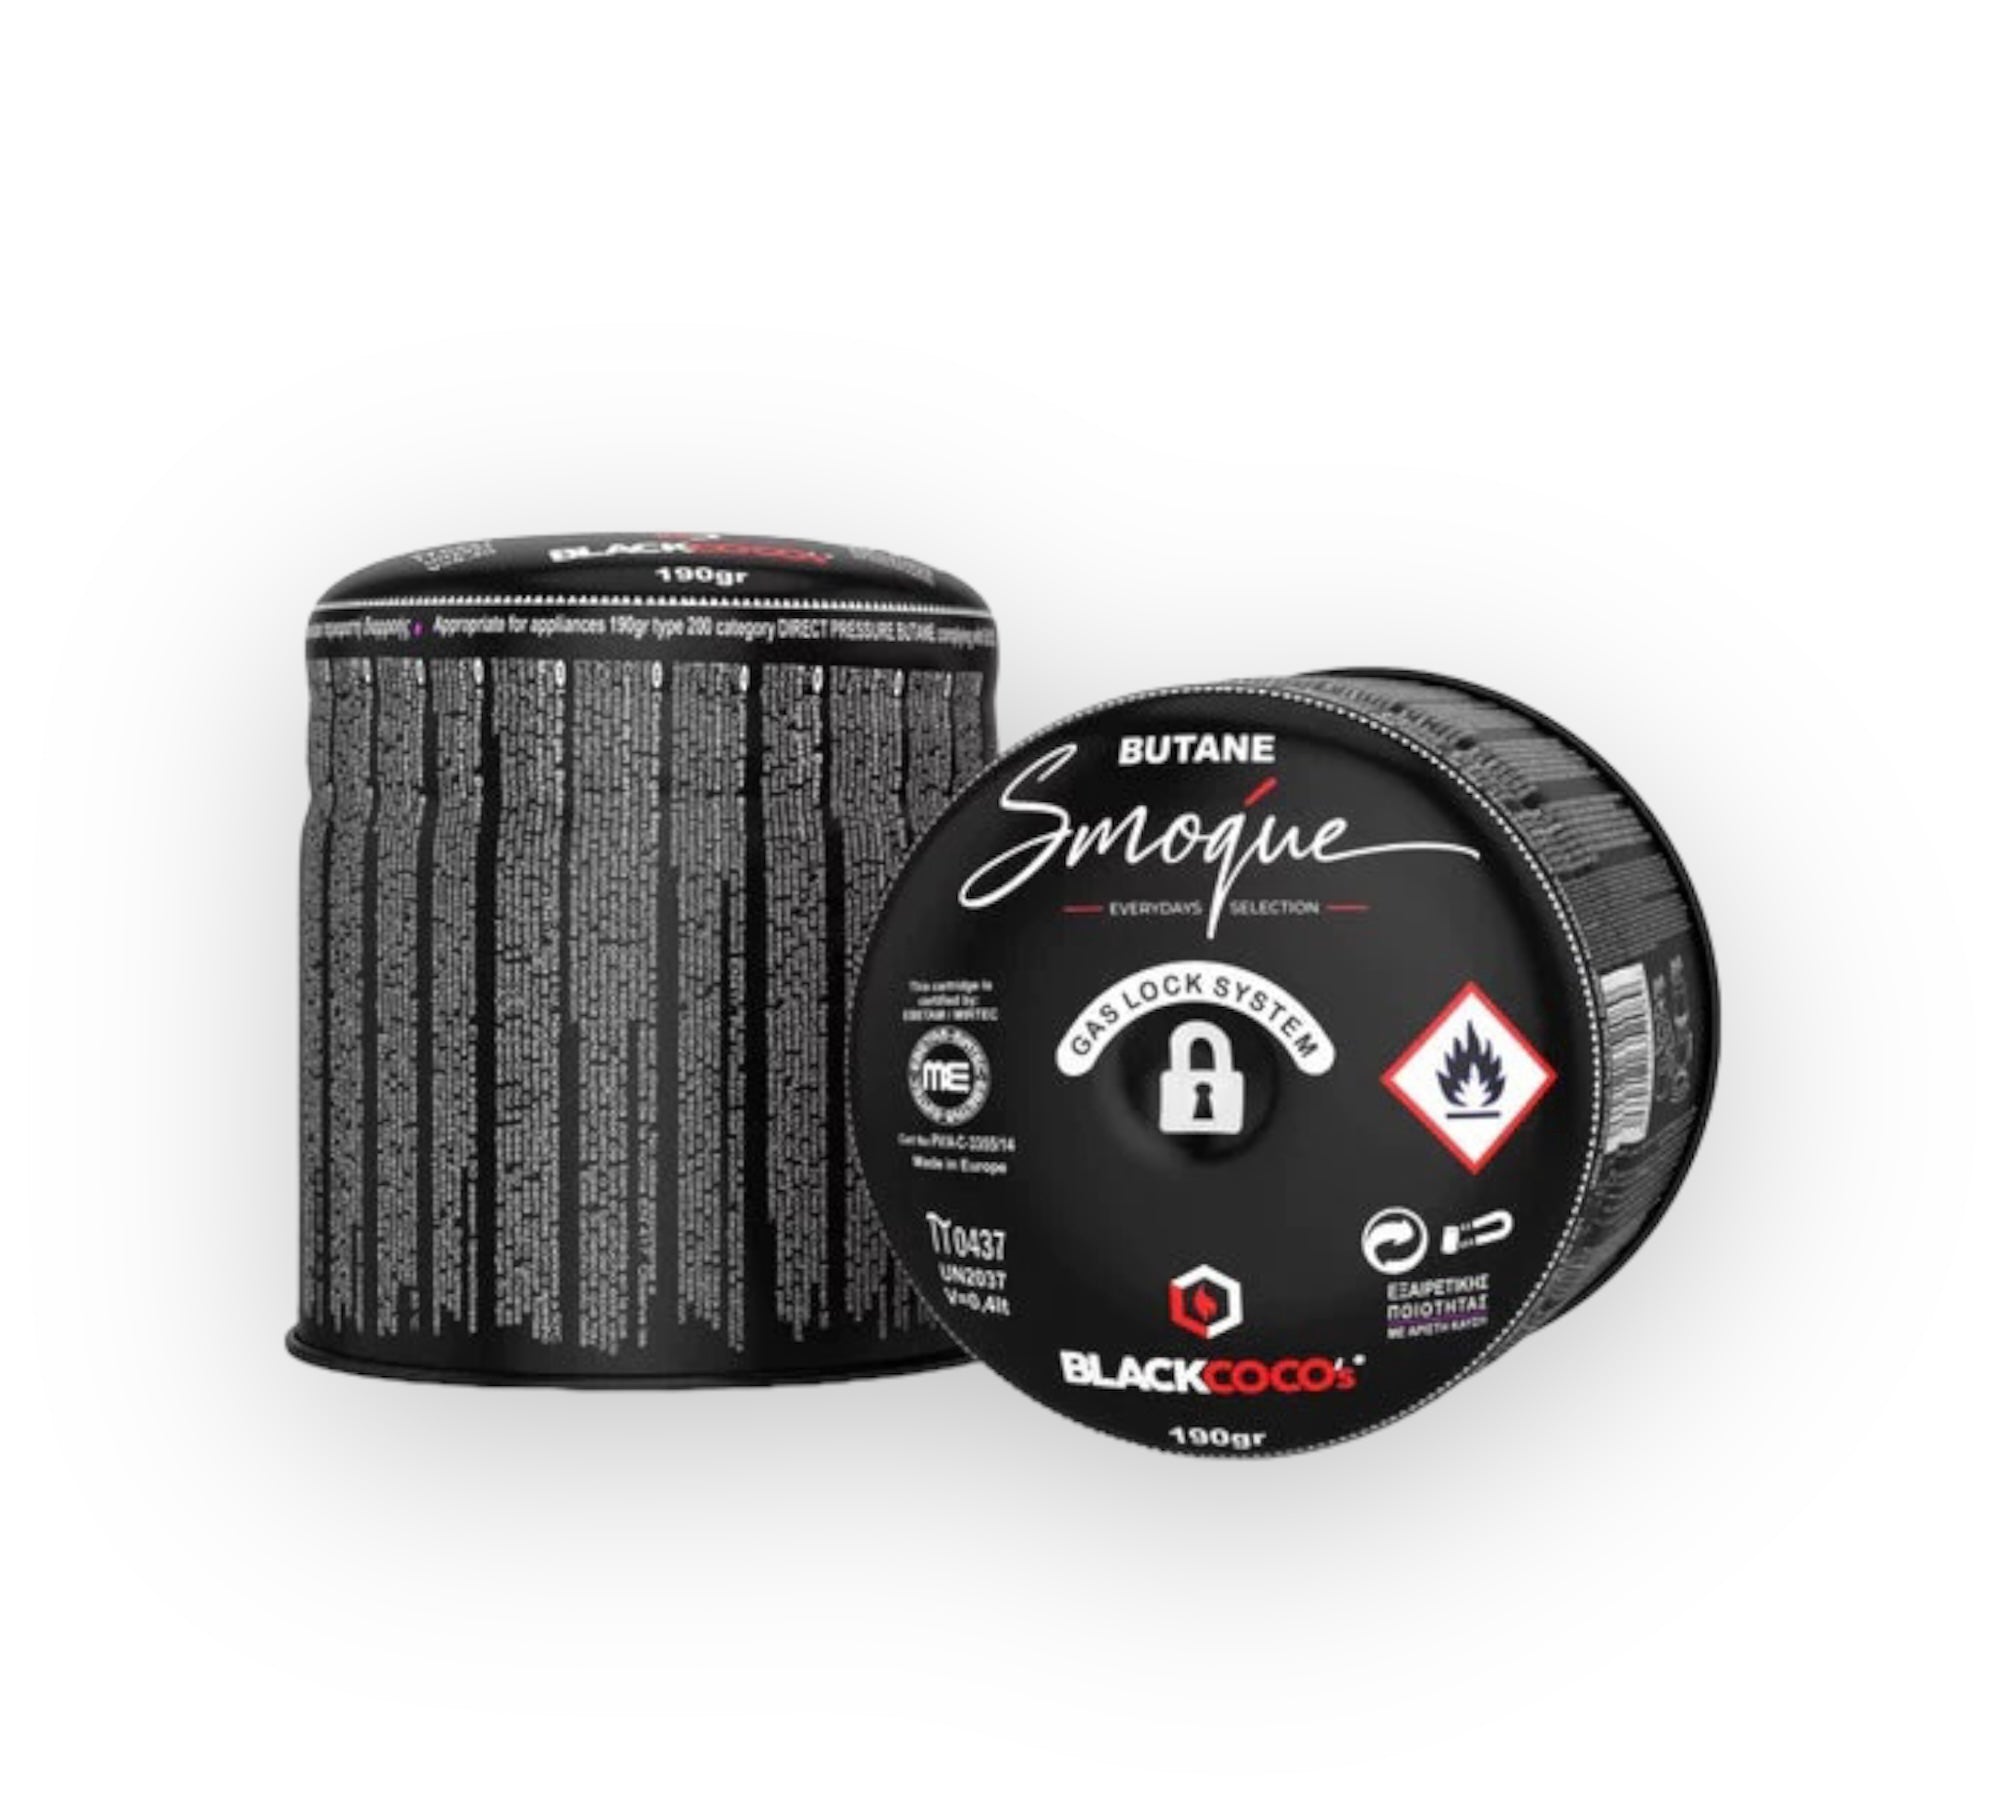 Smoque - gas cartridge 190g - BLACKCOCO's Edition